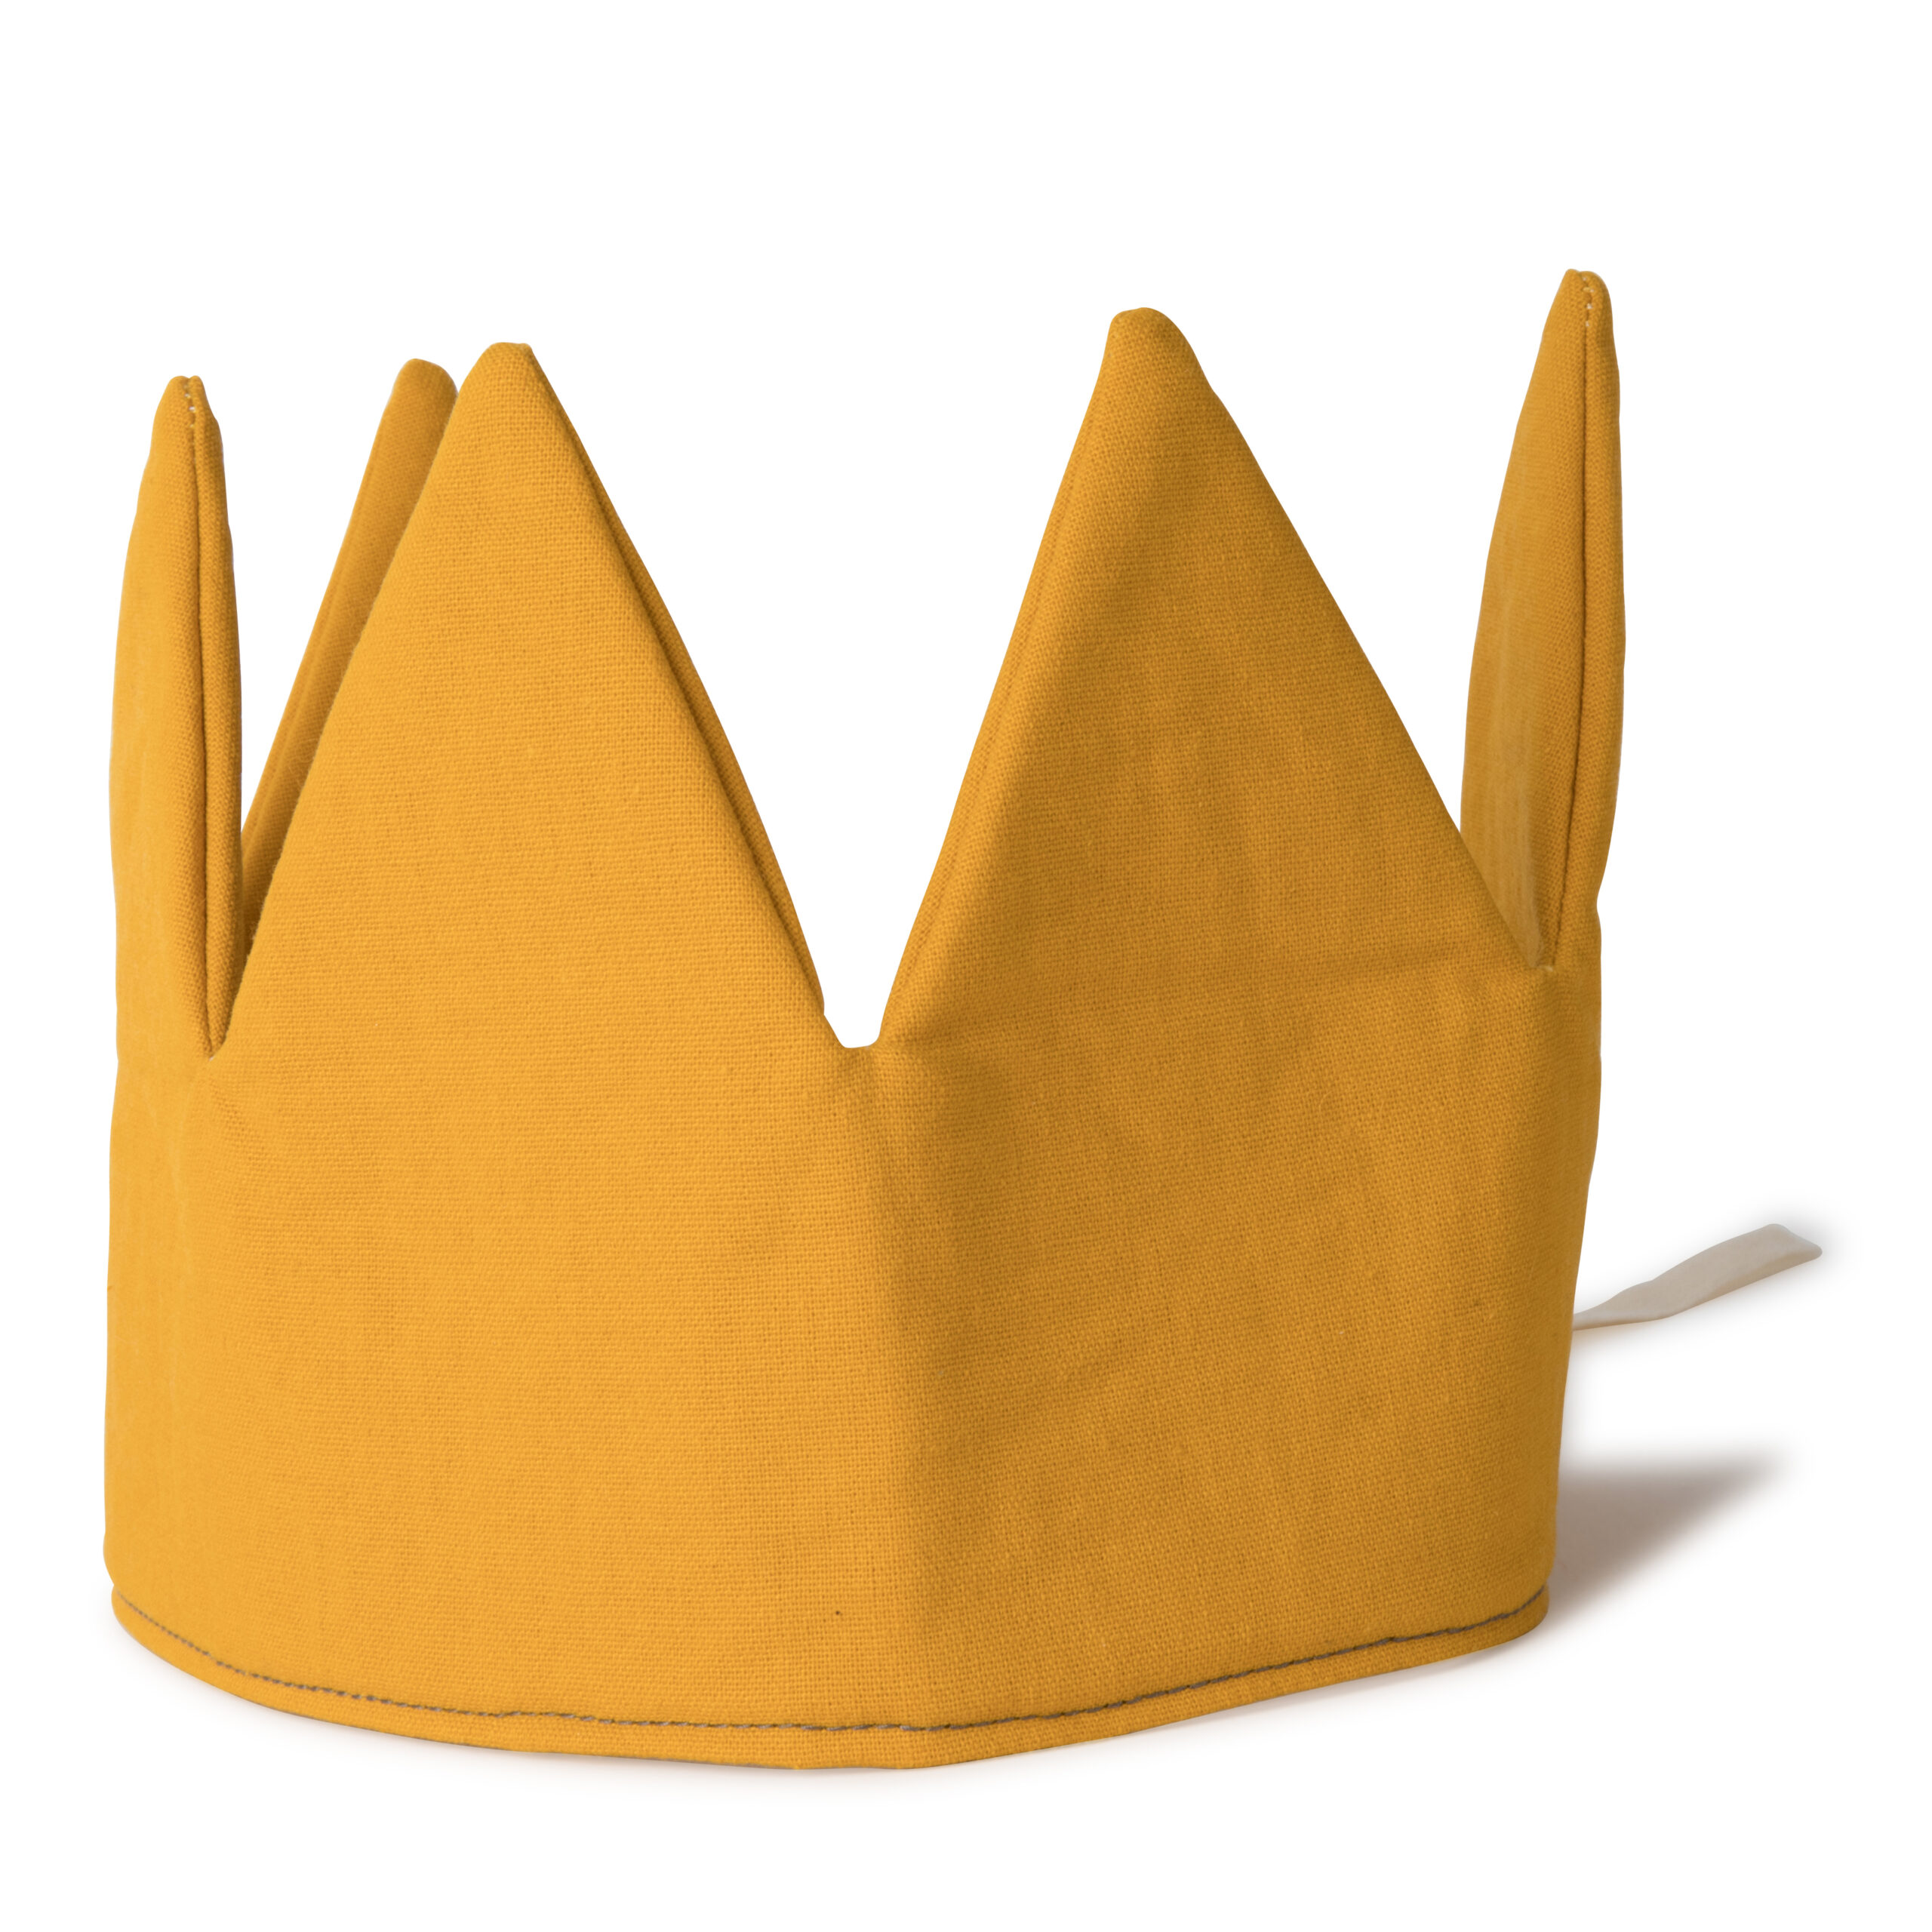 Coroana Crazy Crown galben-mustar, Picca Loulou